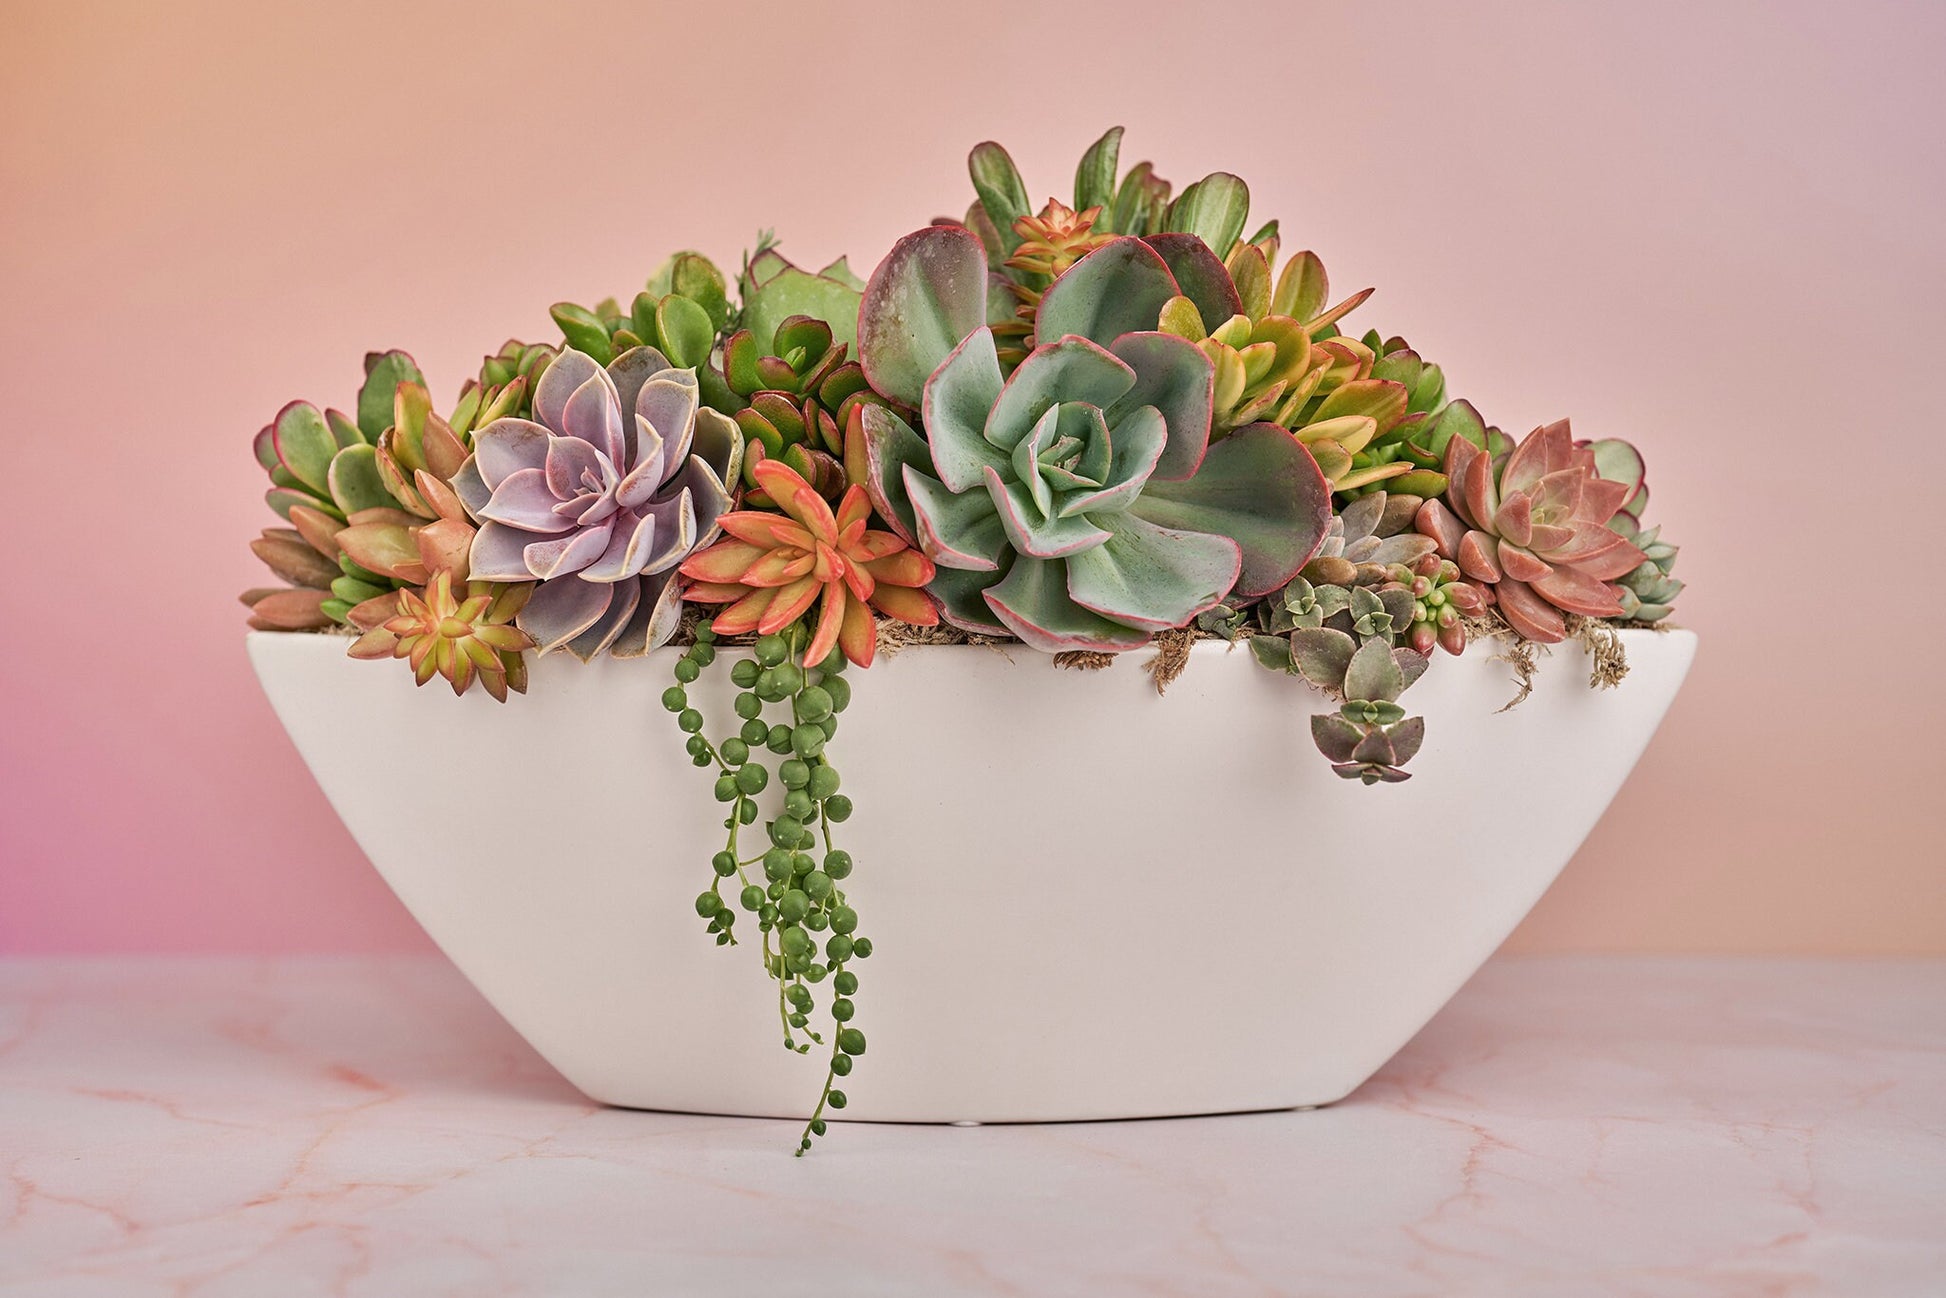 Long White Ceramic Boat Living Succulent Arrangement Gift | Alt Floral Wedding Event Centerpiece | Indoor Garden